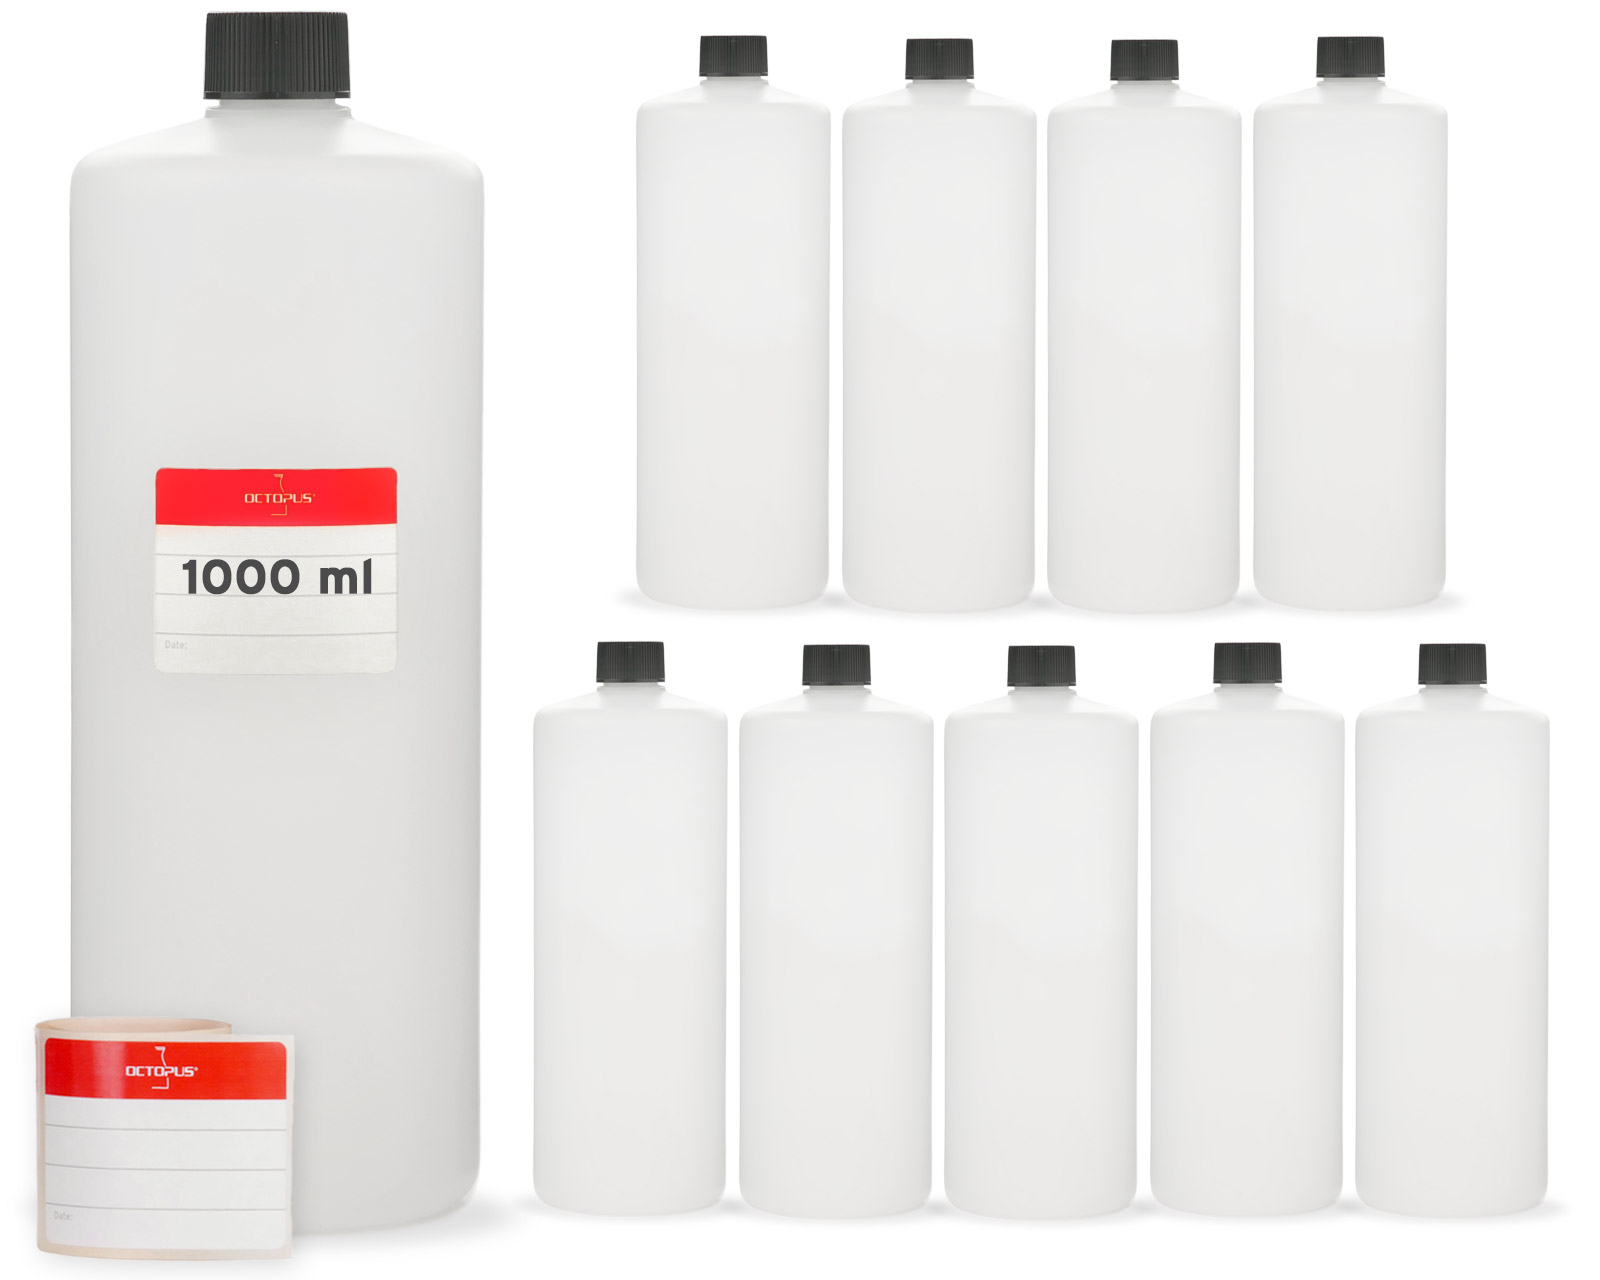 1000 ml HDPE plastic bottles round with black caps